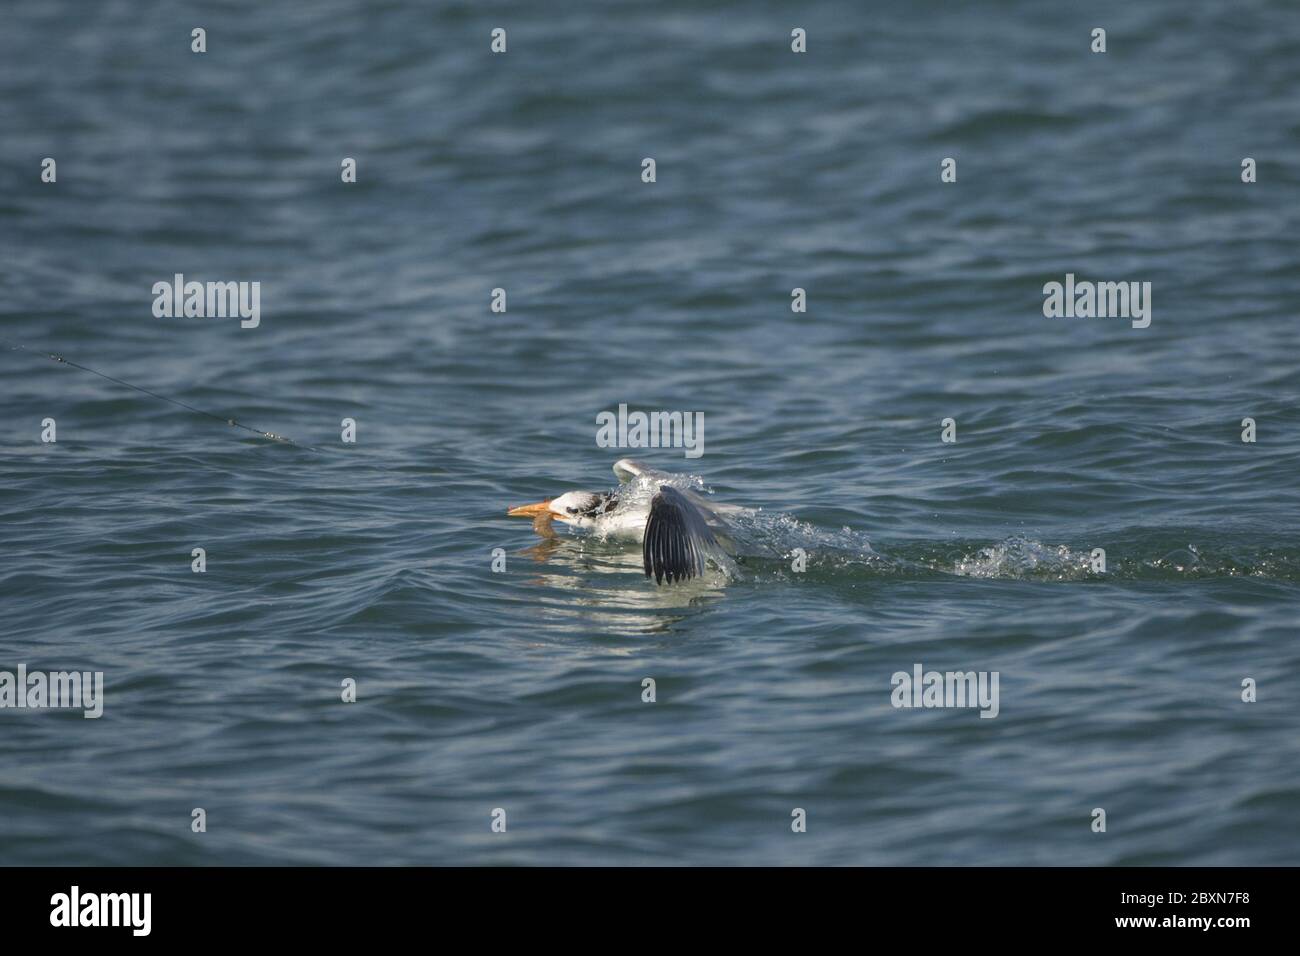 koenigsseeschwalbe, koenigseeschwalbe, koenigs-seeschwalbe, royal tern, tern, thalasseus maximus, Sterna maxima Stock Photo